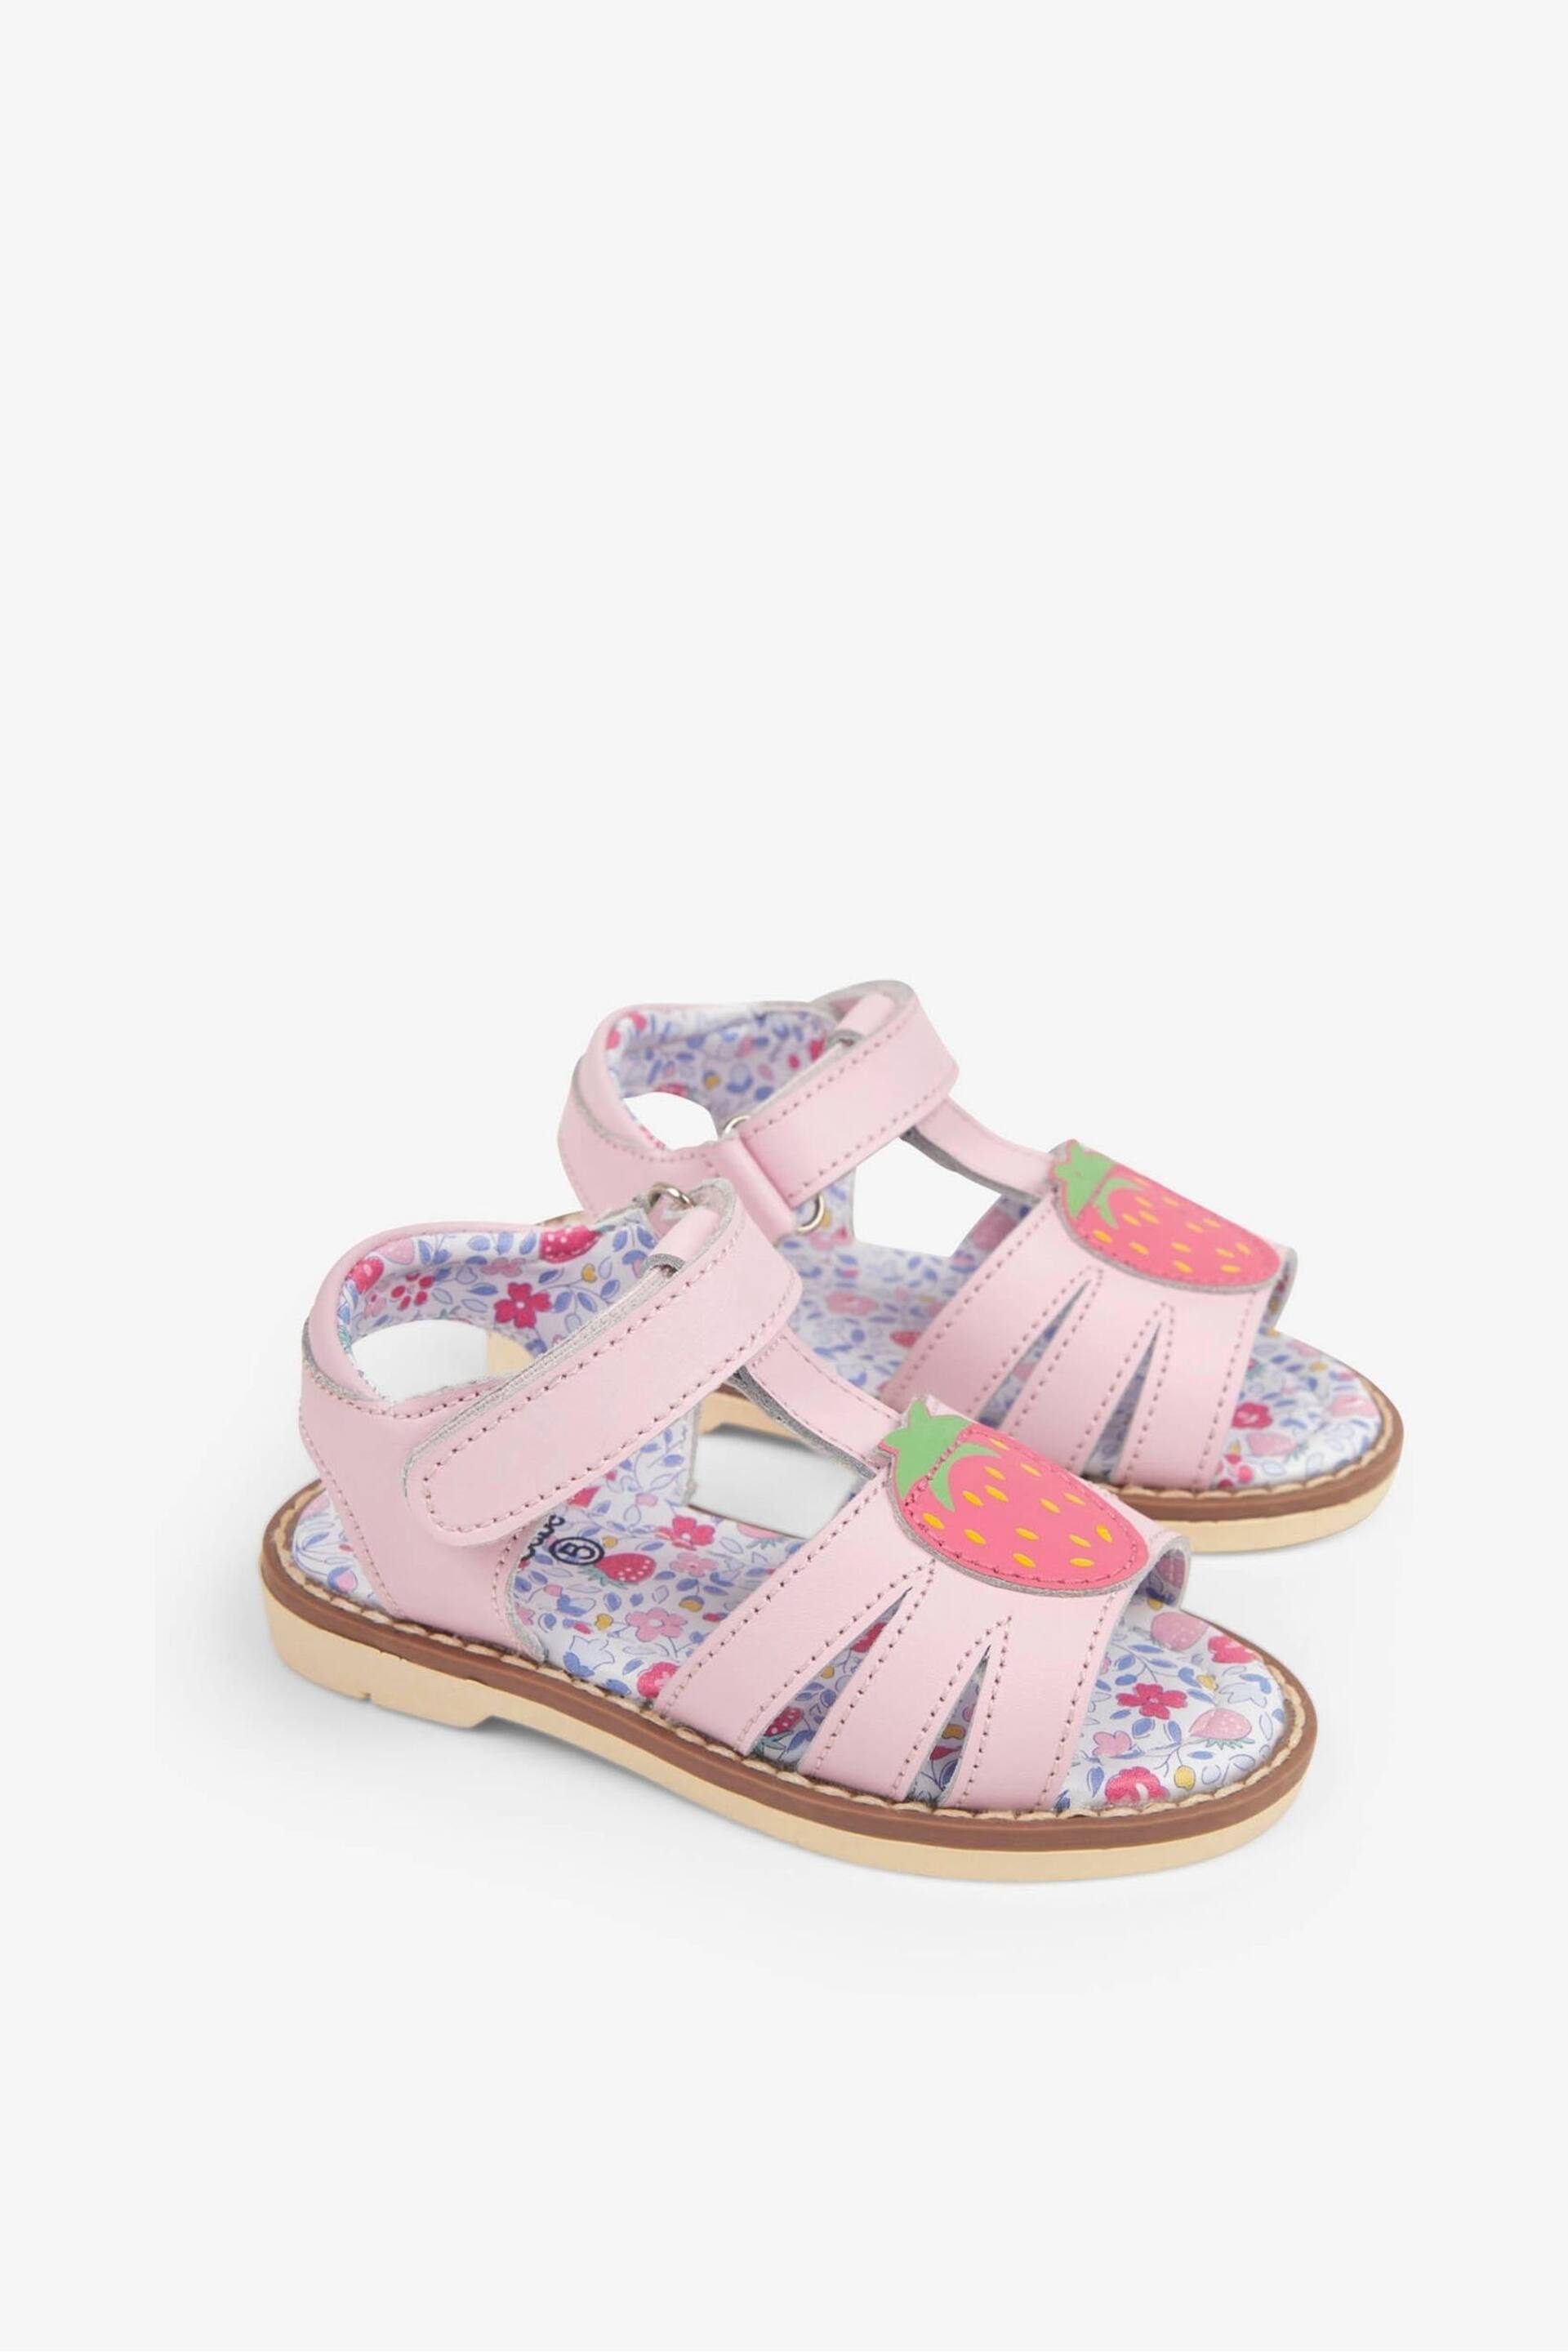 JoJo Maman Bébé Pink Strawberry Appliqué Sandals - Image 1 of 7